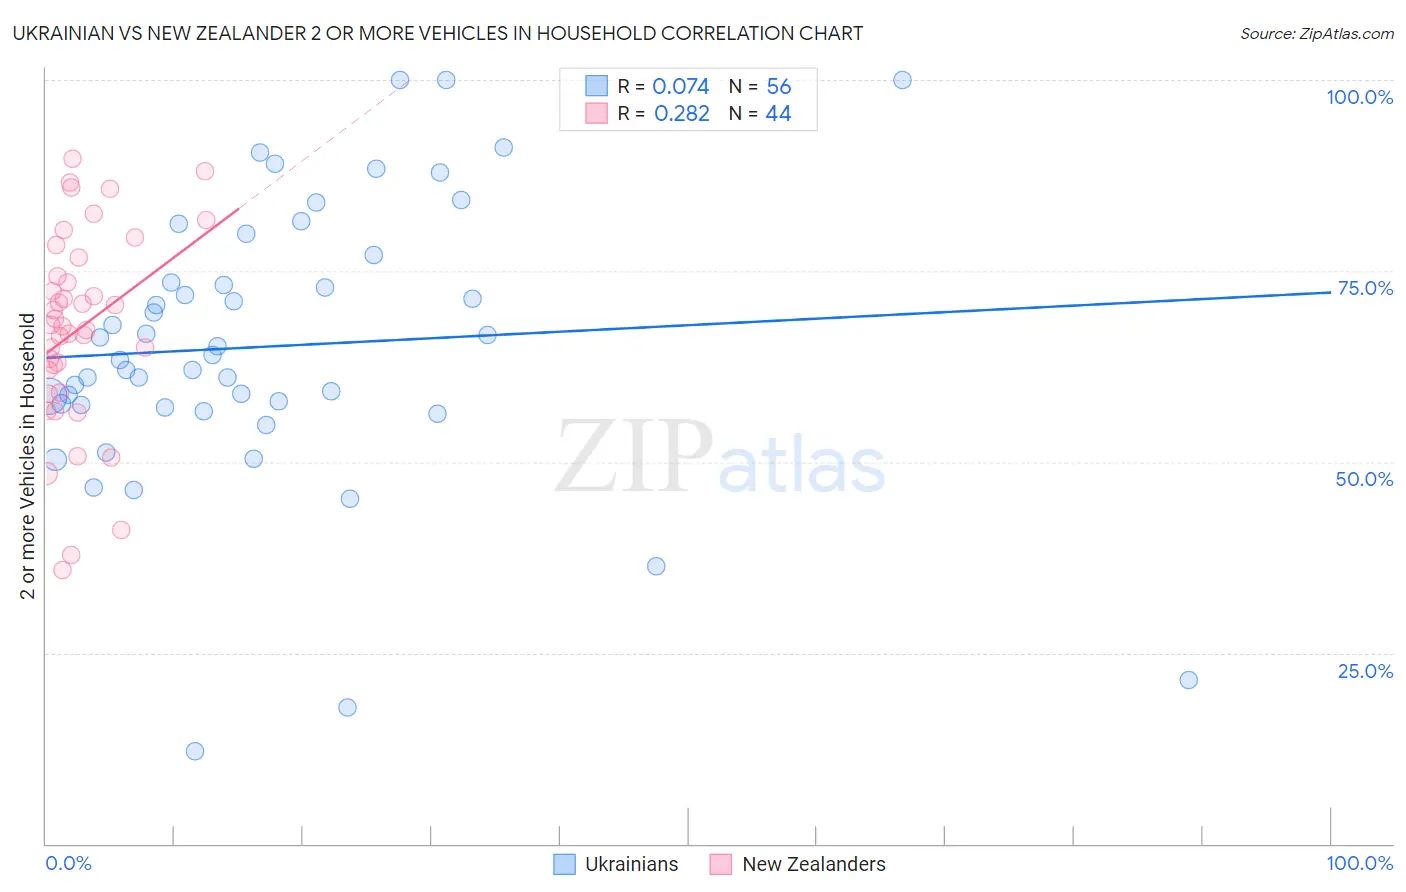 Ukrainian vs New Zealander 2 or more Vehicles in Household